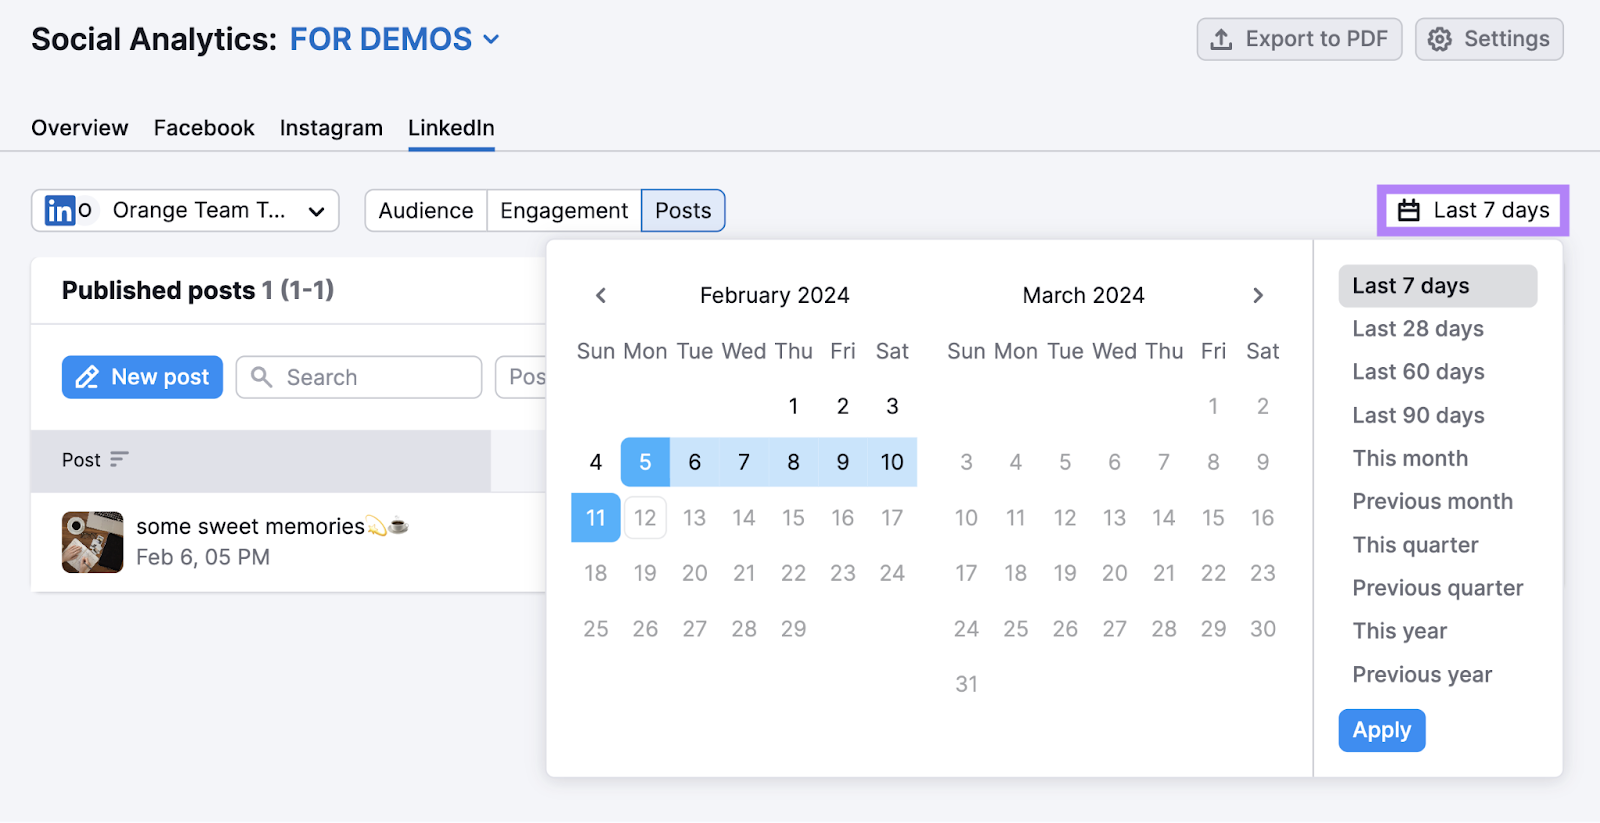 "Last 7 days" drop-down calendar opened in Social Analytics tool